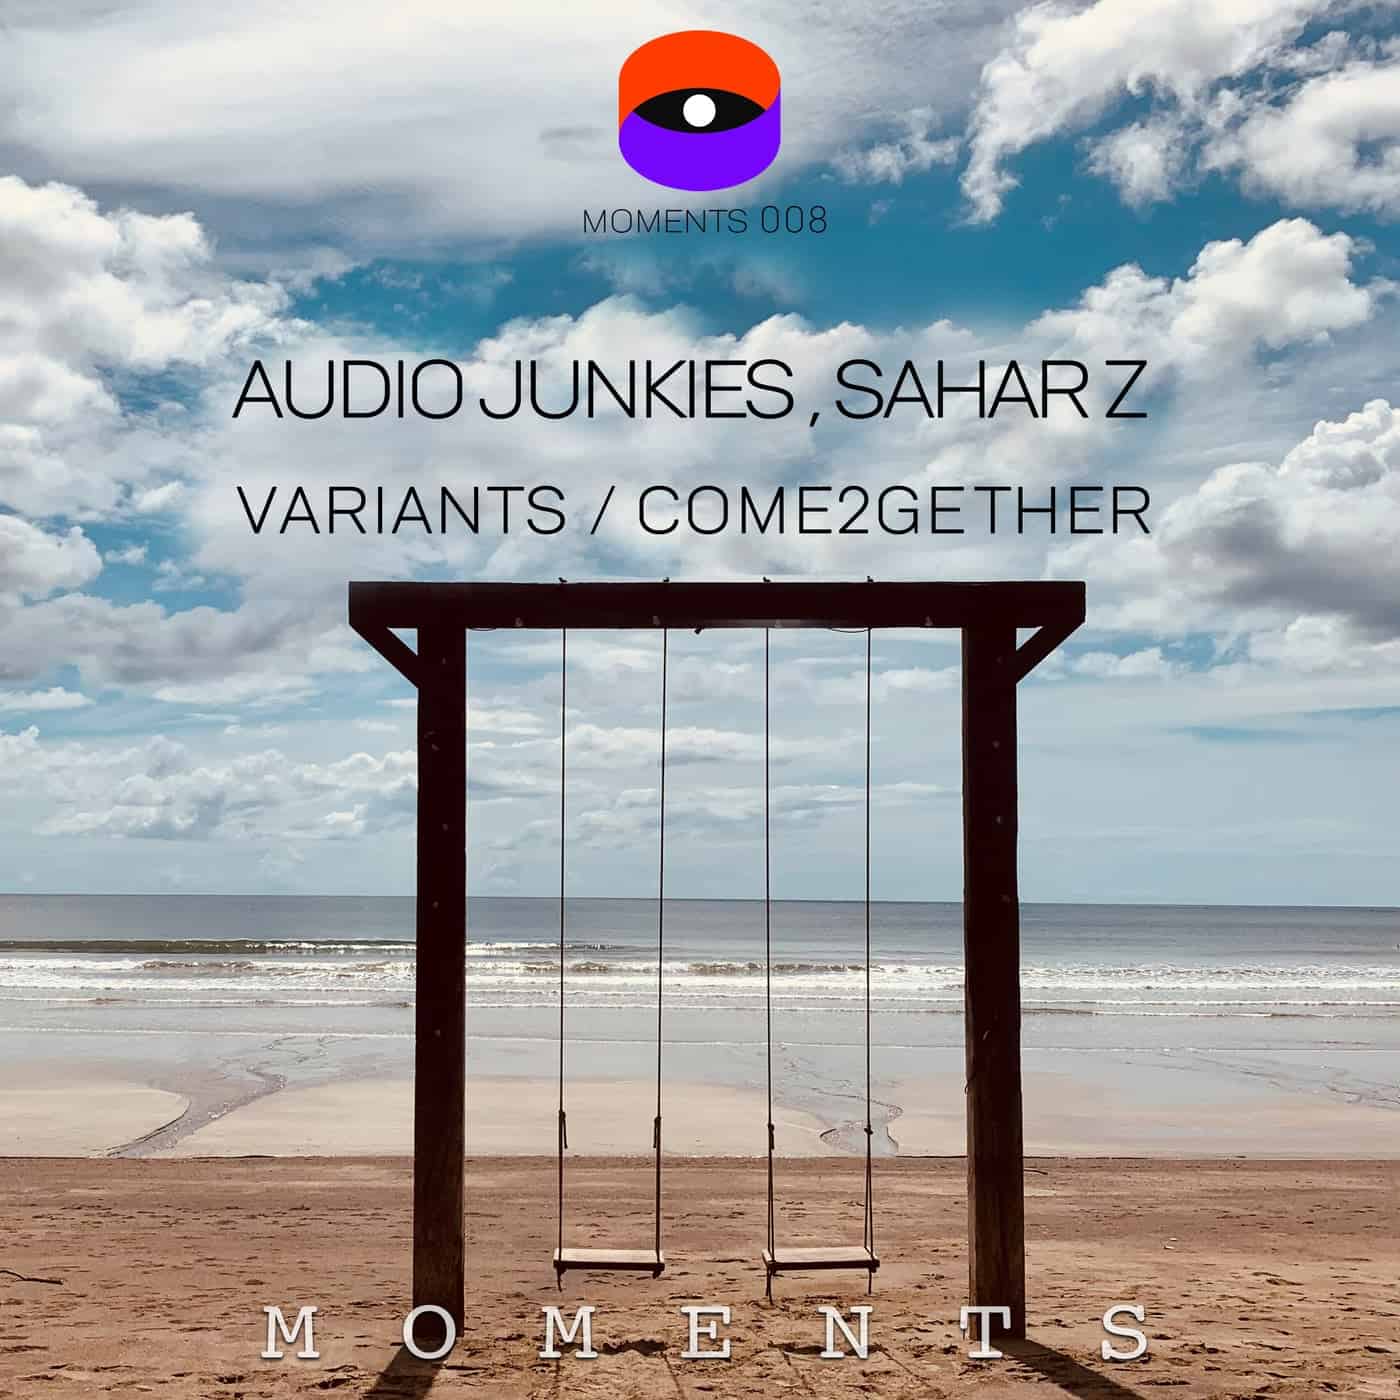 Download Sahar Z, Audio Junkies - Variants / Come2gether on Electrobuzz